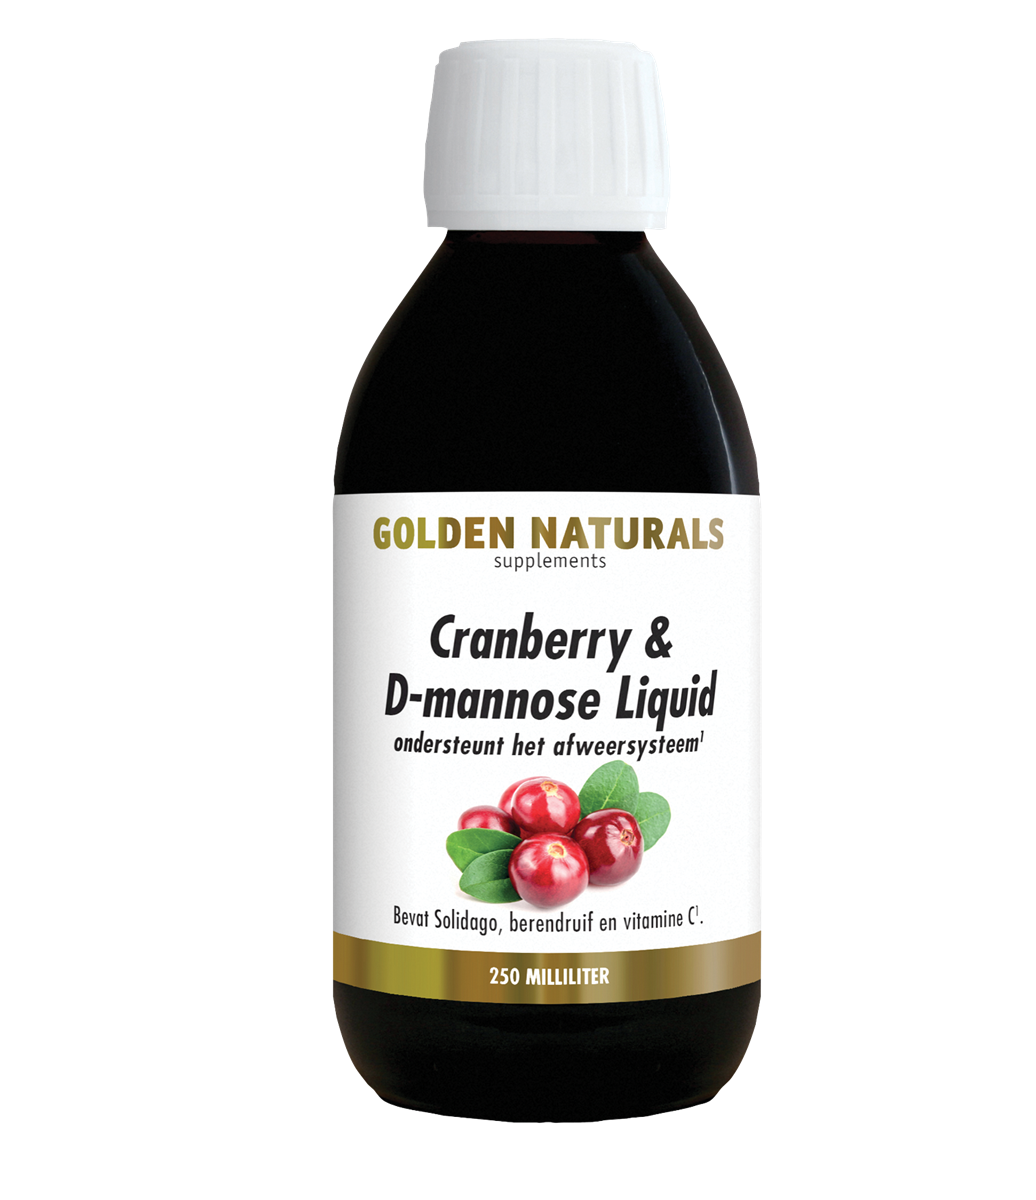 Cranberry & D-mannose Liquid